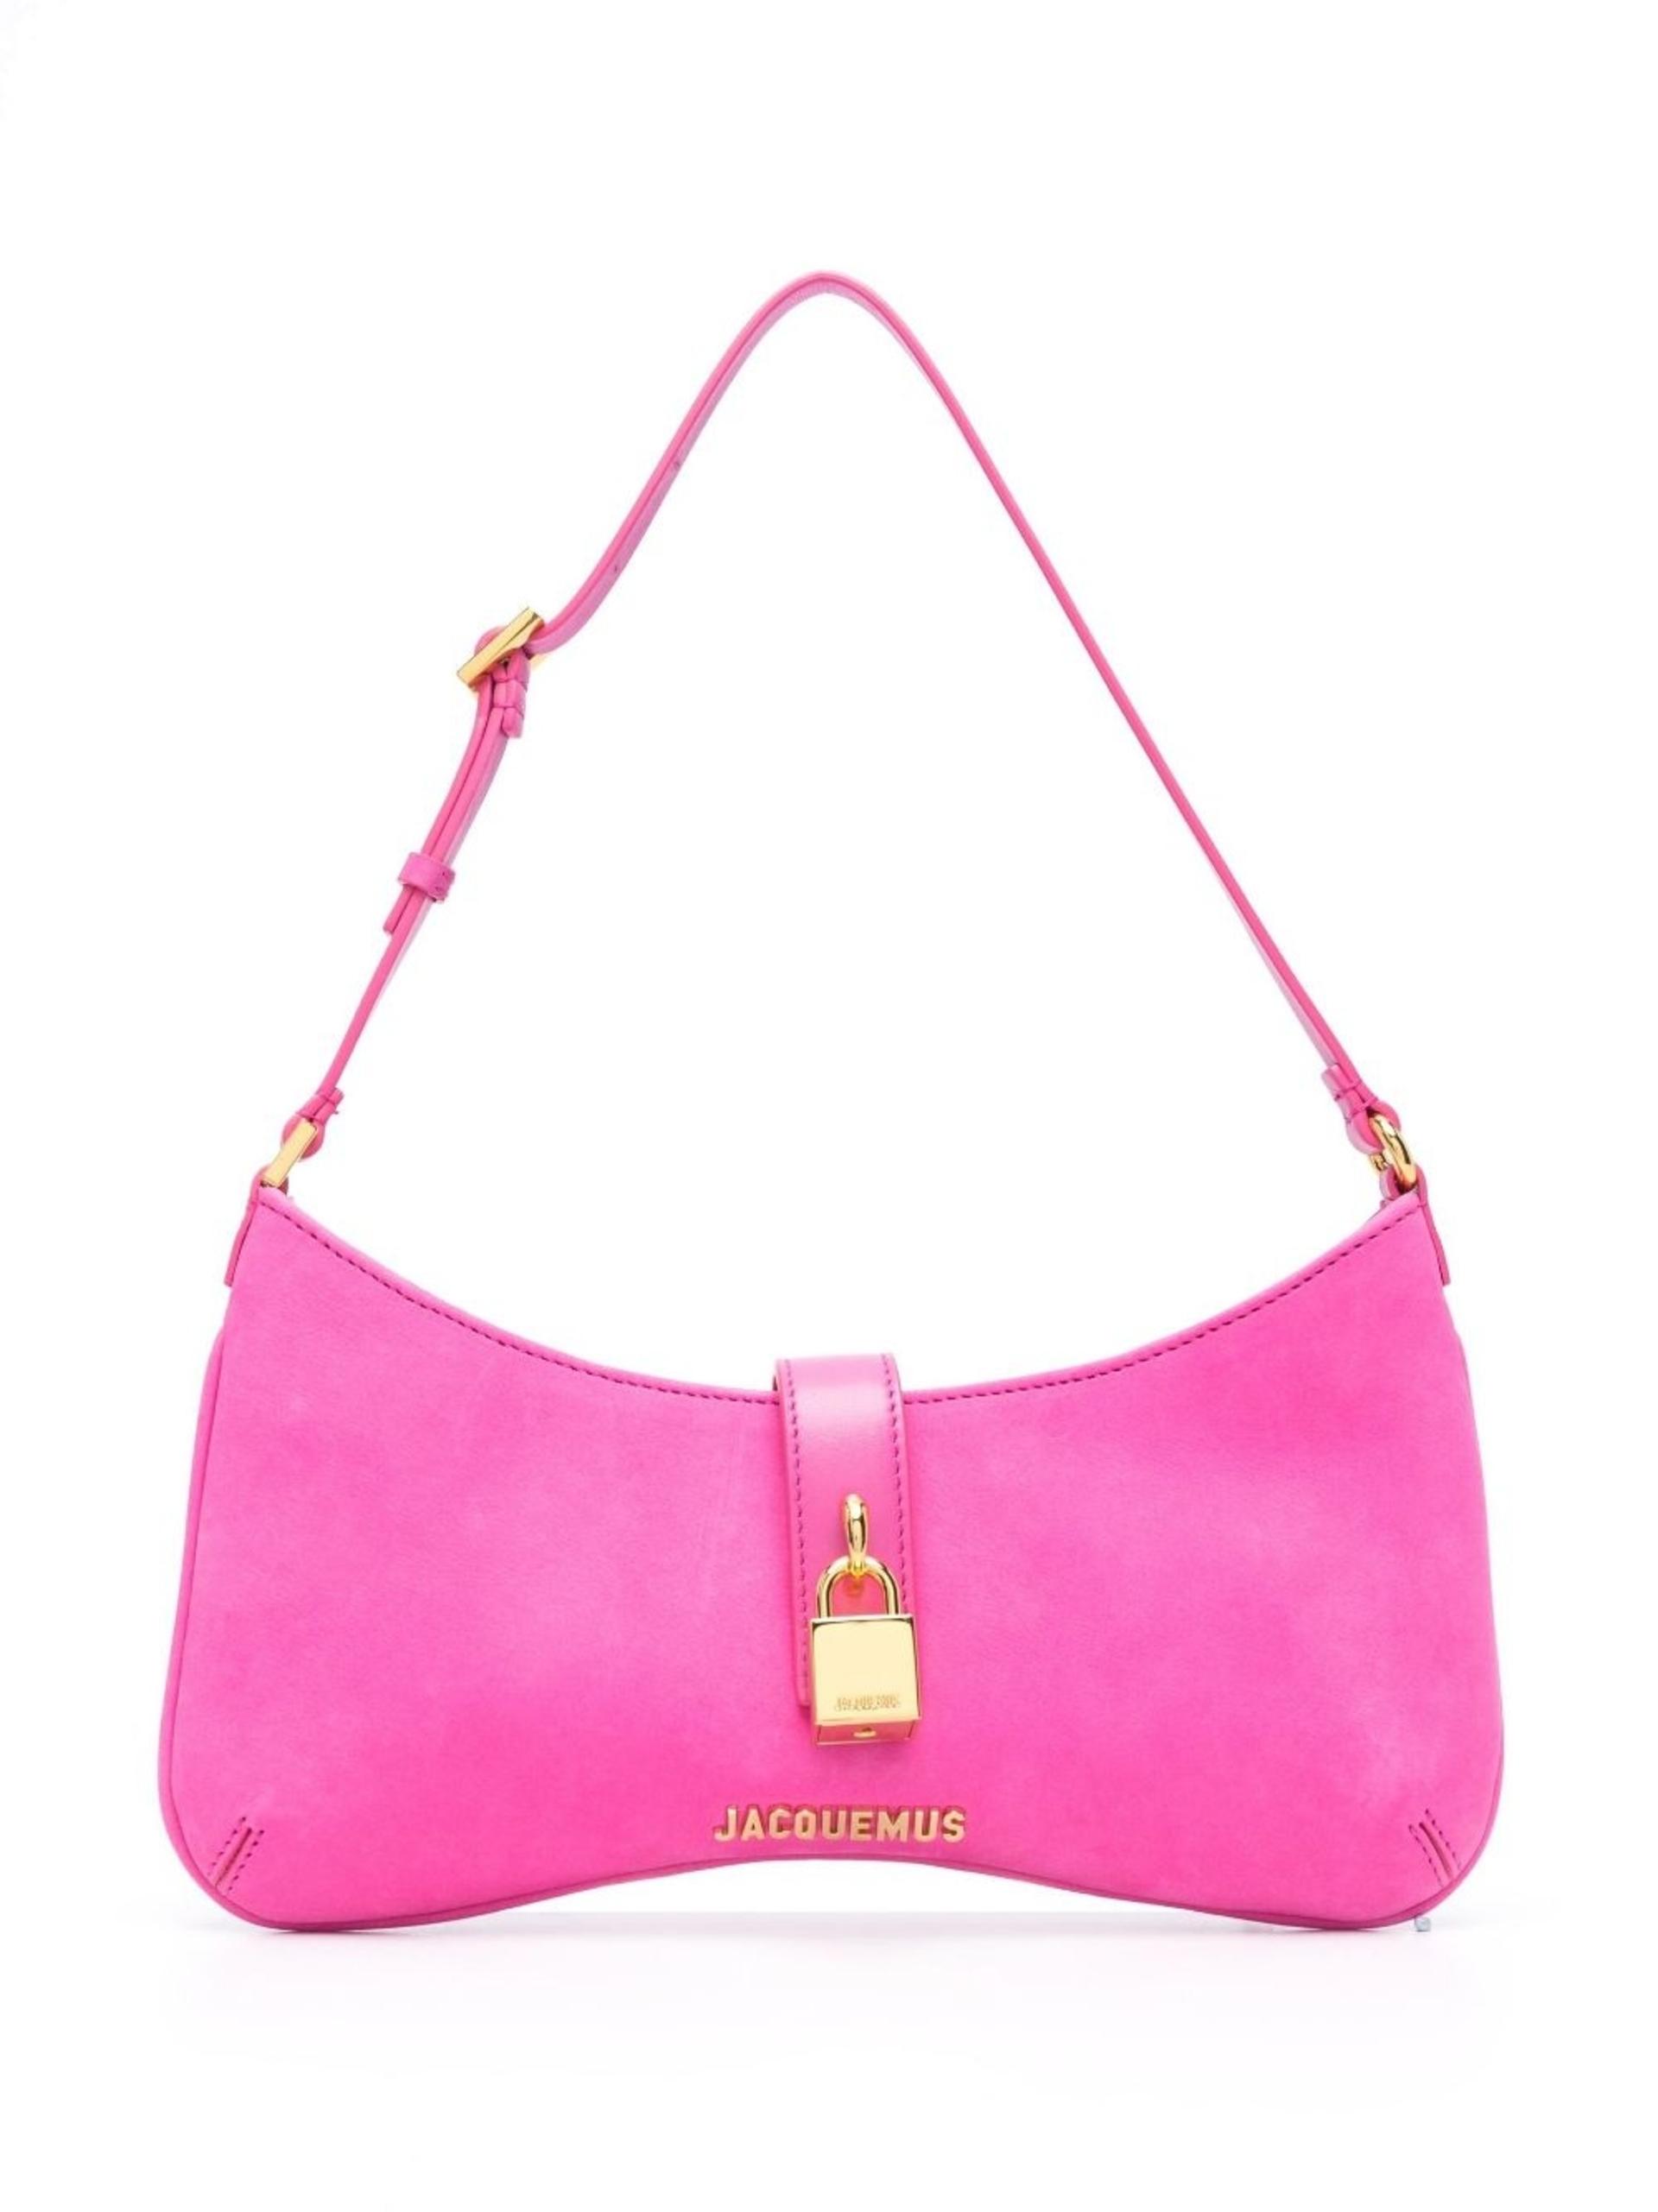 Jacquemus Le Bisou Cadenas Suede Shoulder Bag in Pink | Lyst